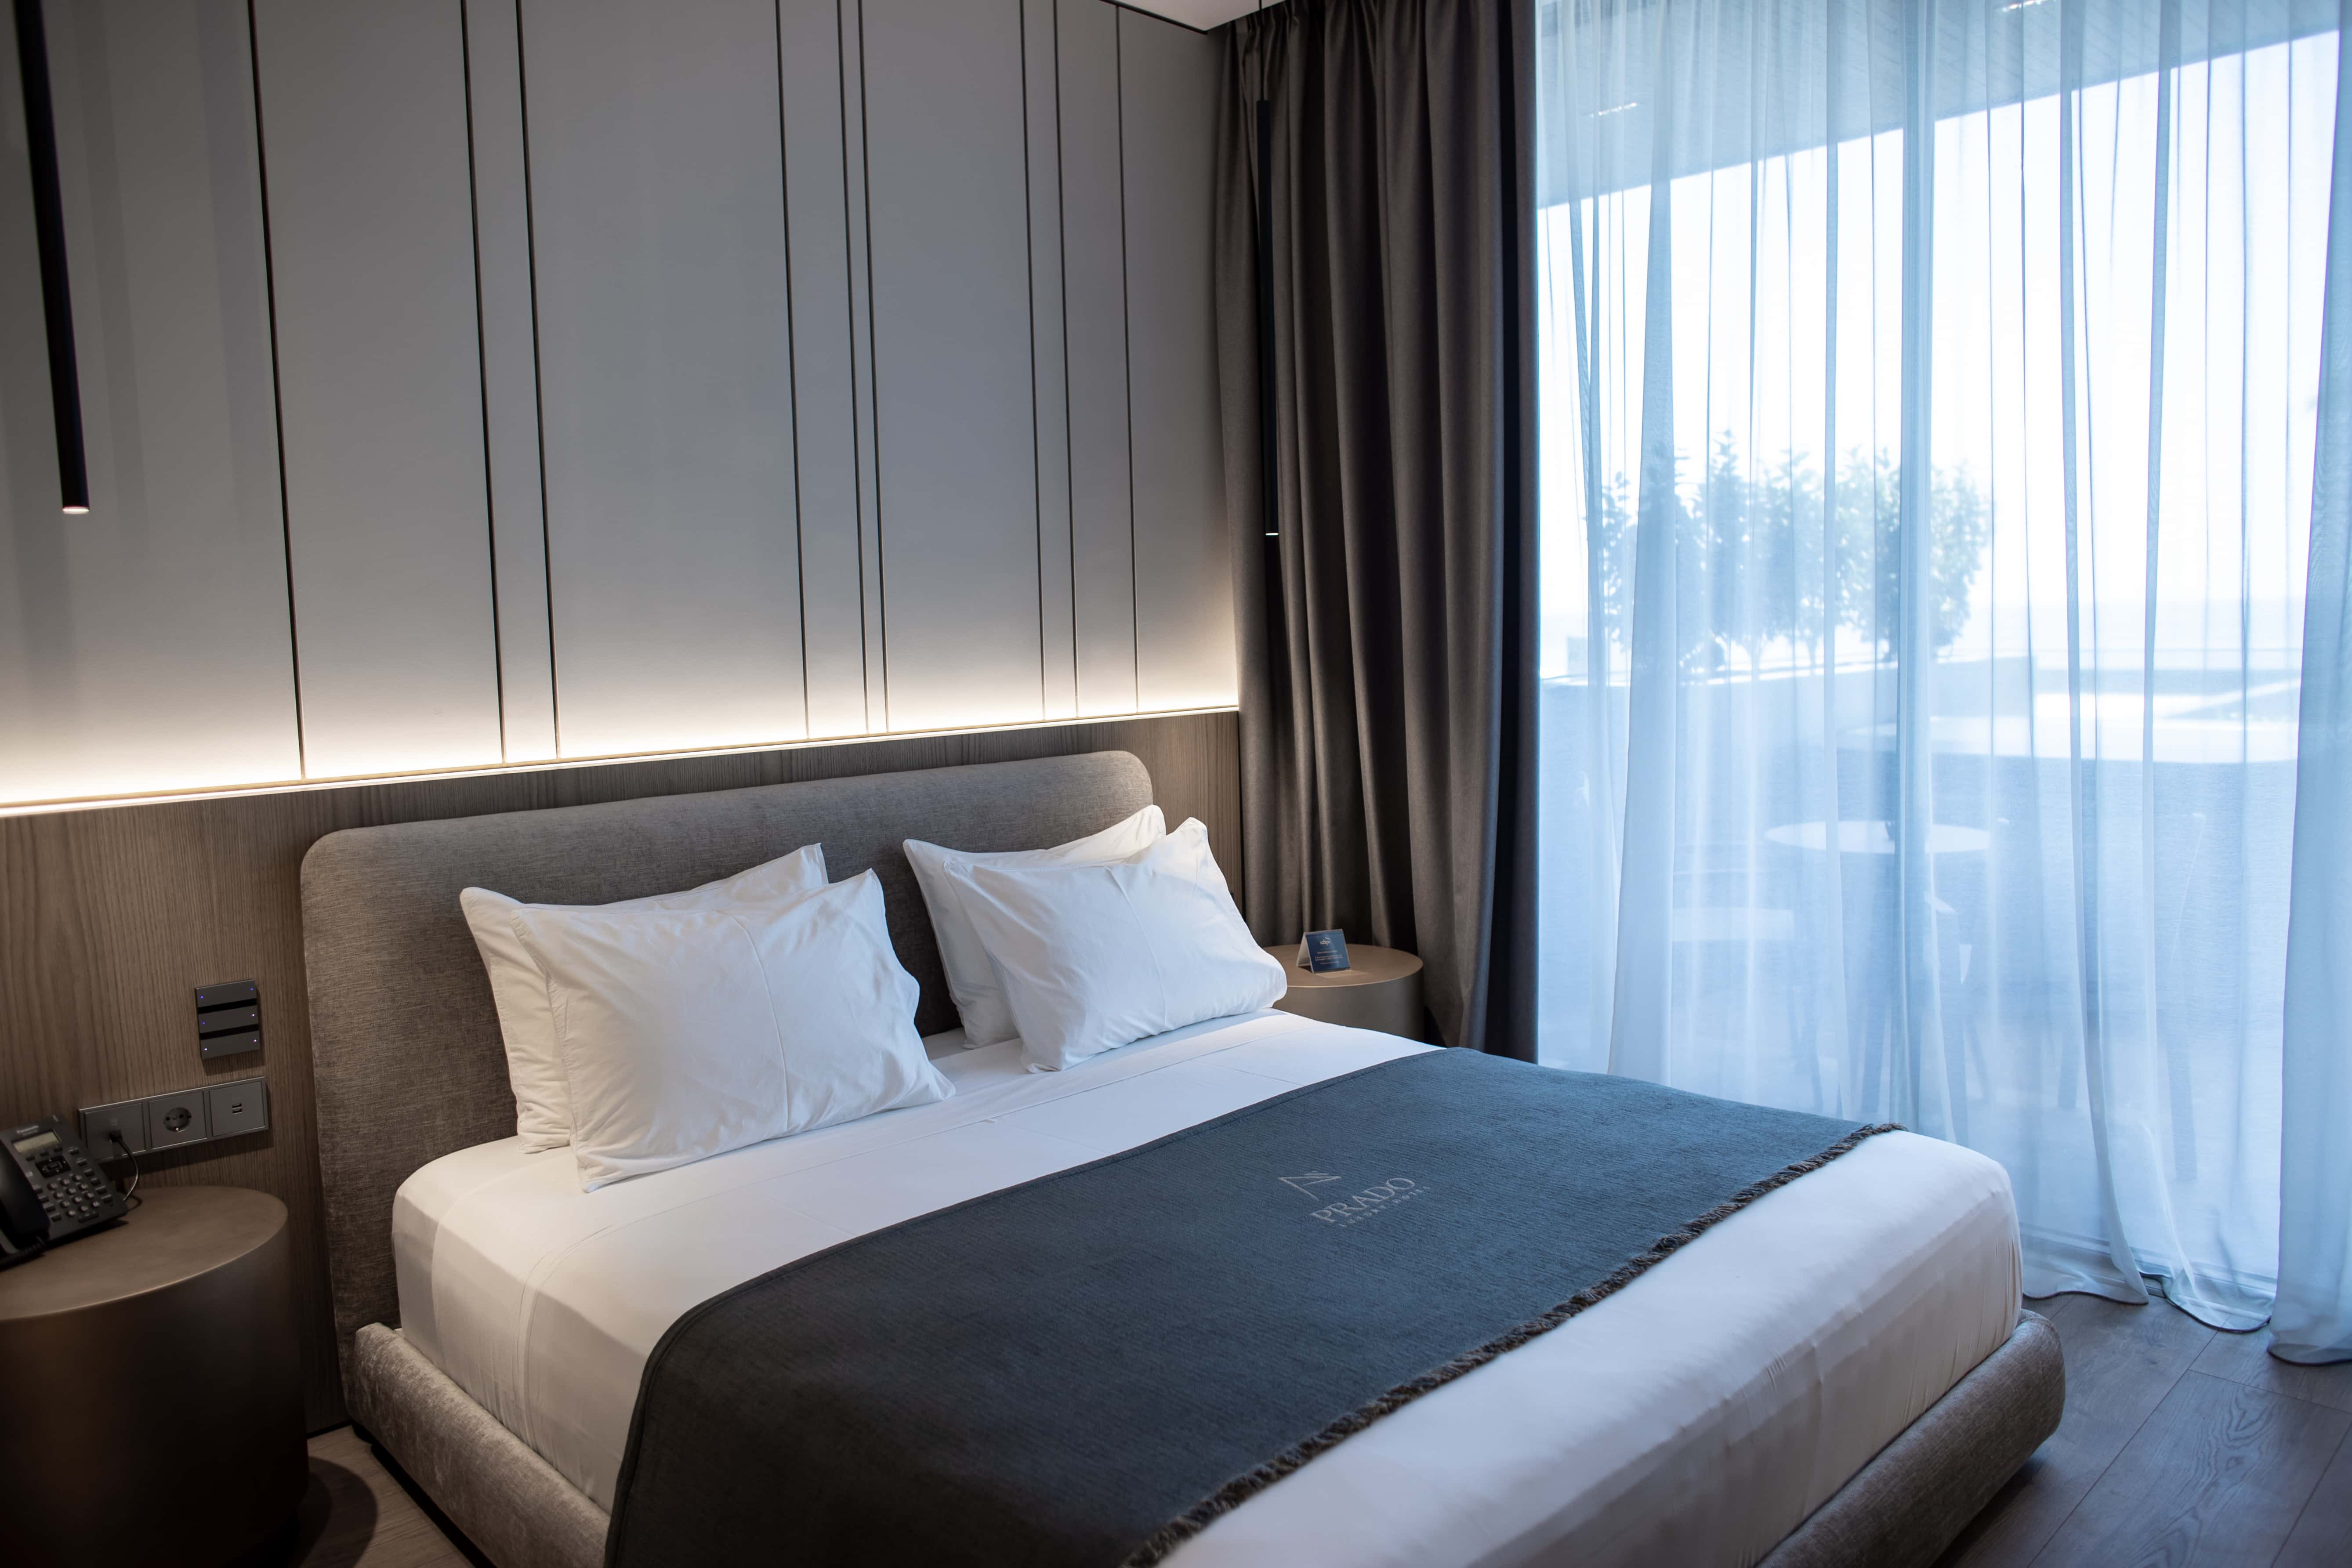 prado_luxury_hotel_room_standard_seaview_jacuzzi_bed_curtain_light